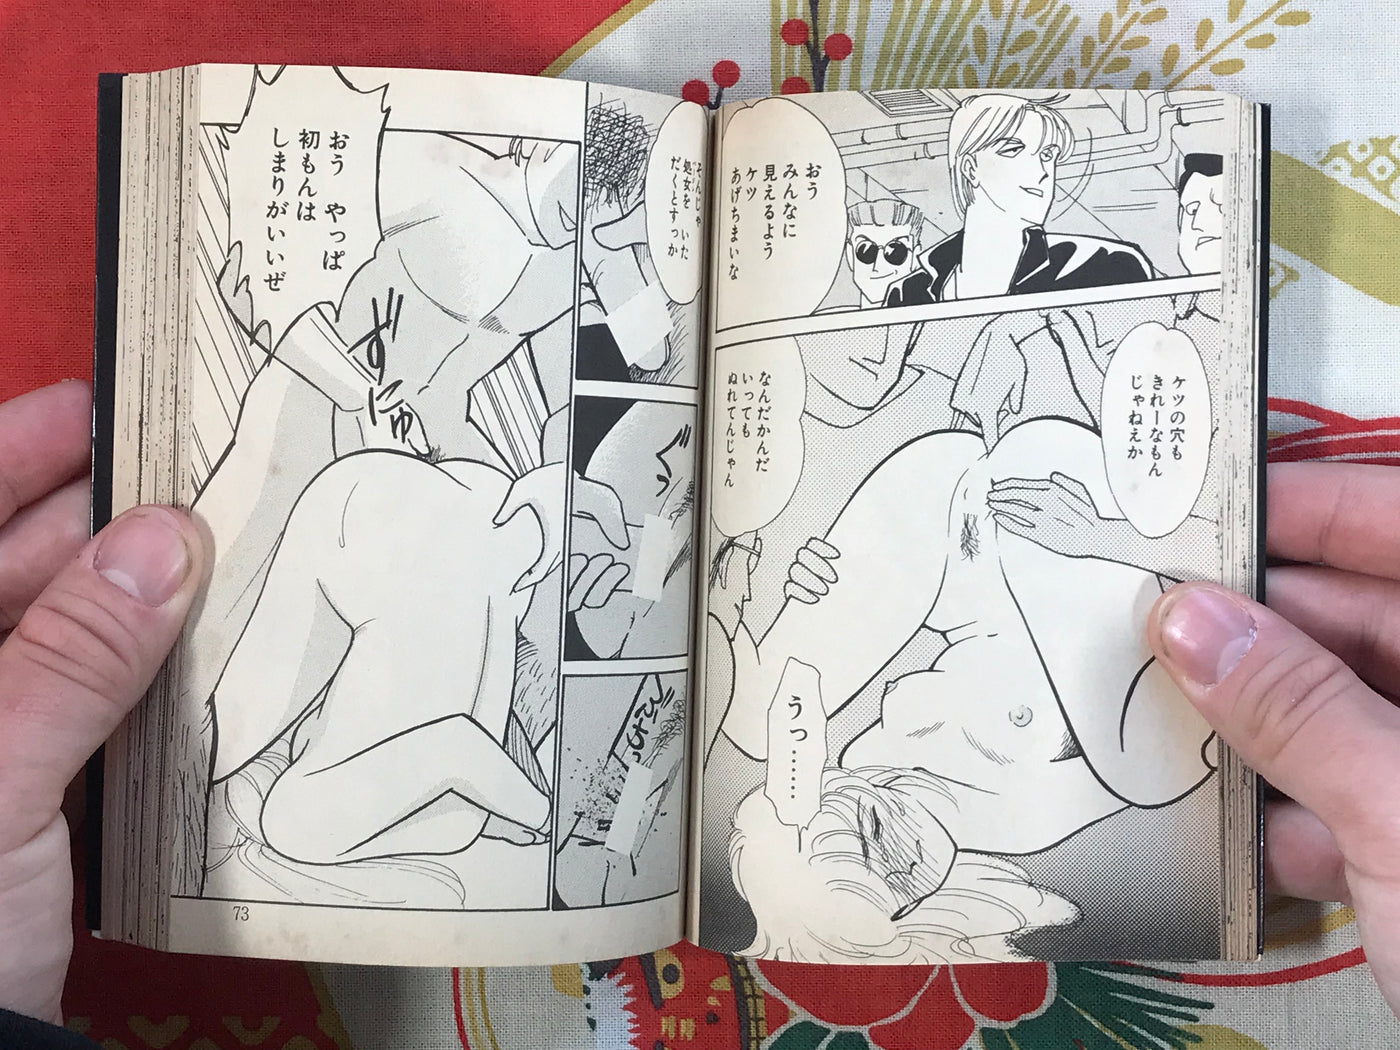 Sexy Scramble by Shinobu Arimura (1988)